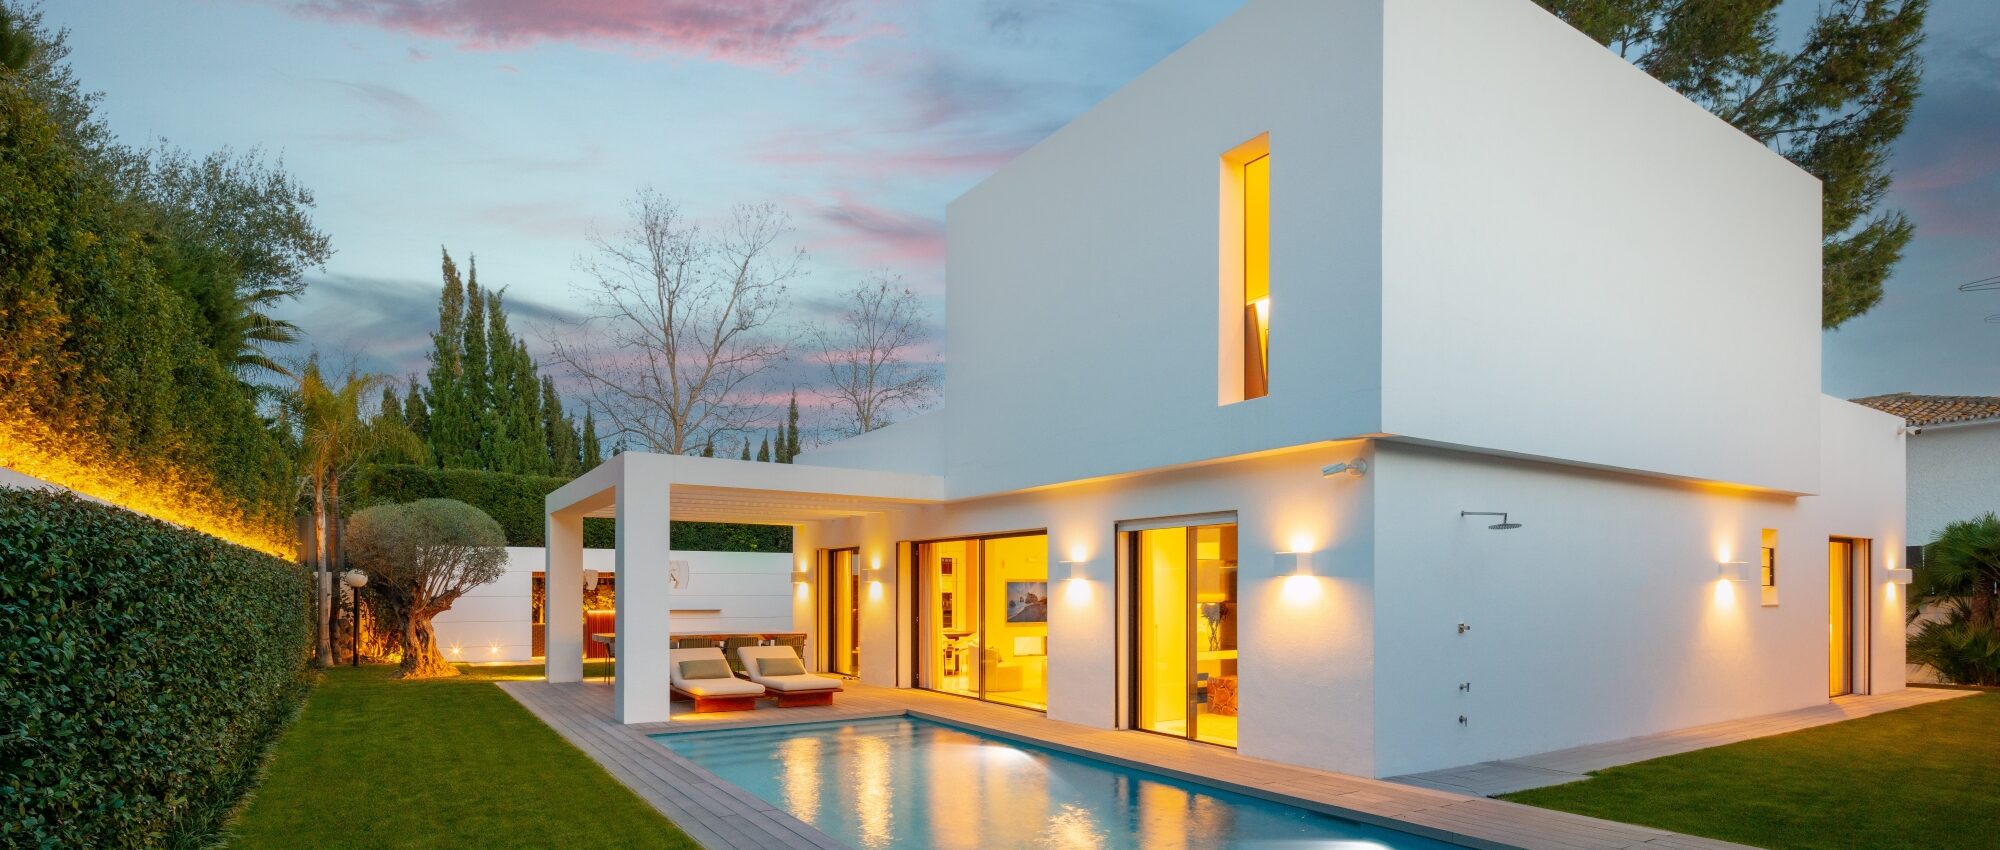 Contemporary villa built in a desirable location